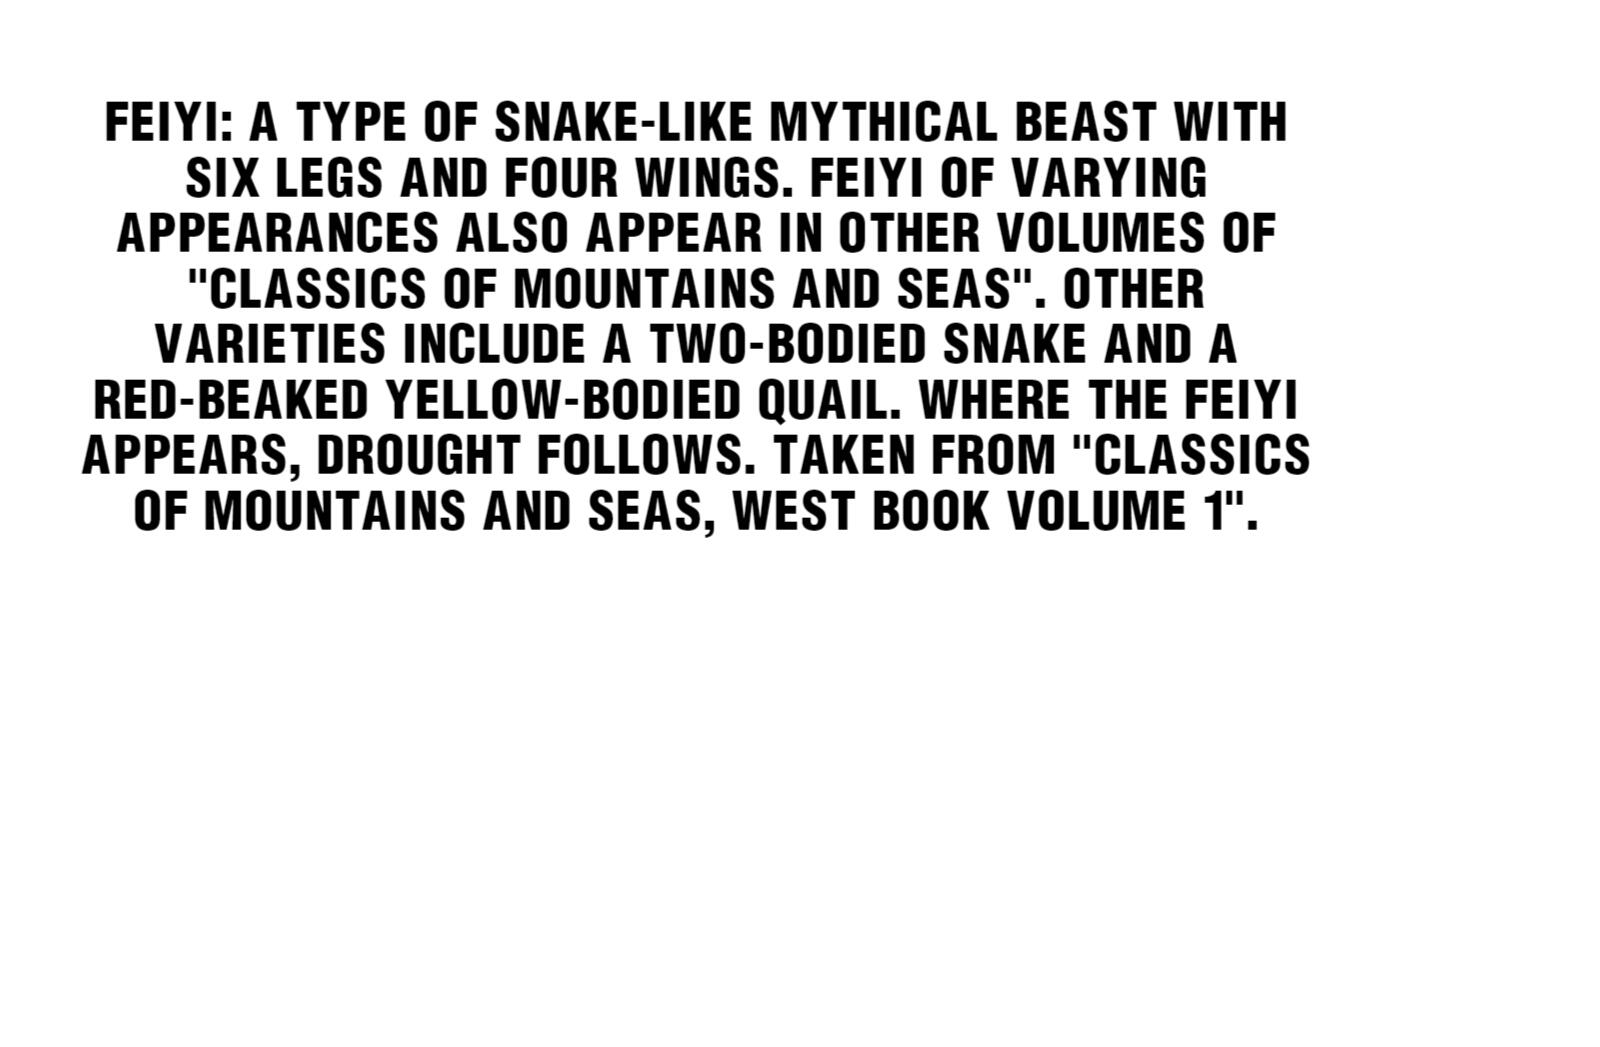 Tonight’s Menu: Magical Beasts! Chapter 17 - MyToon.net